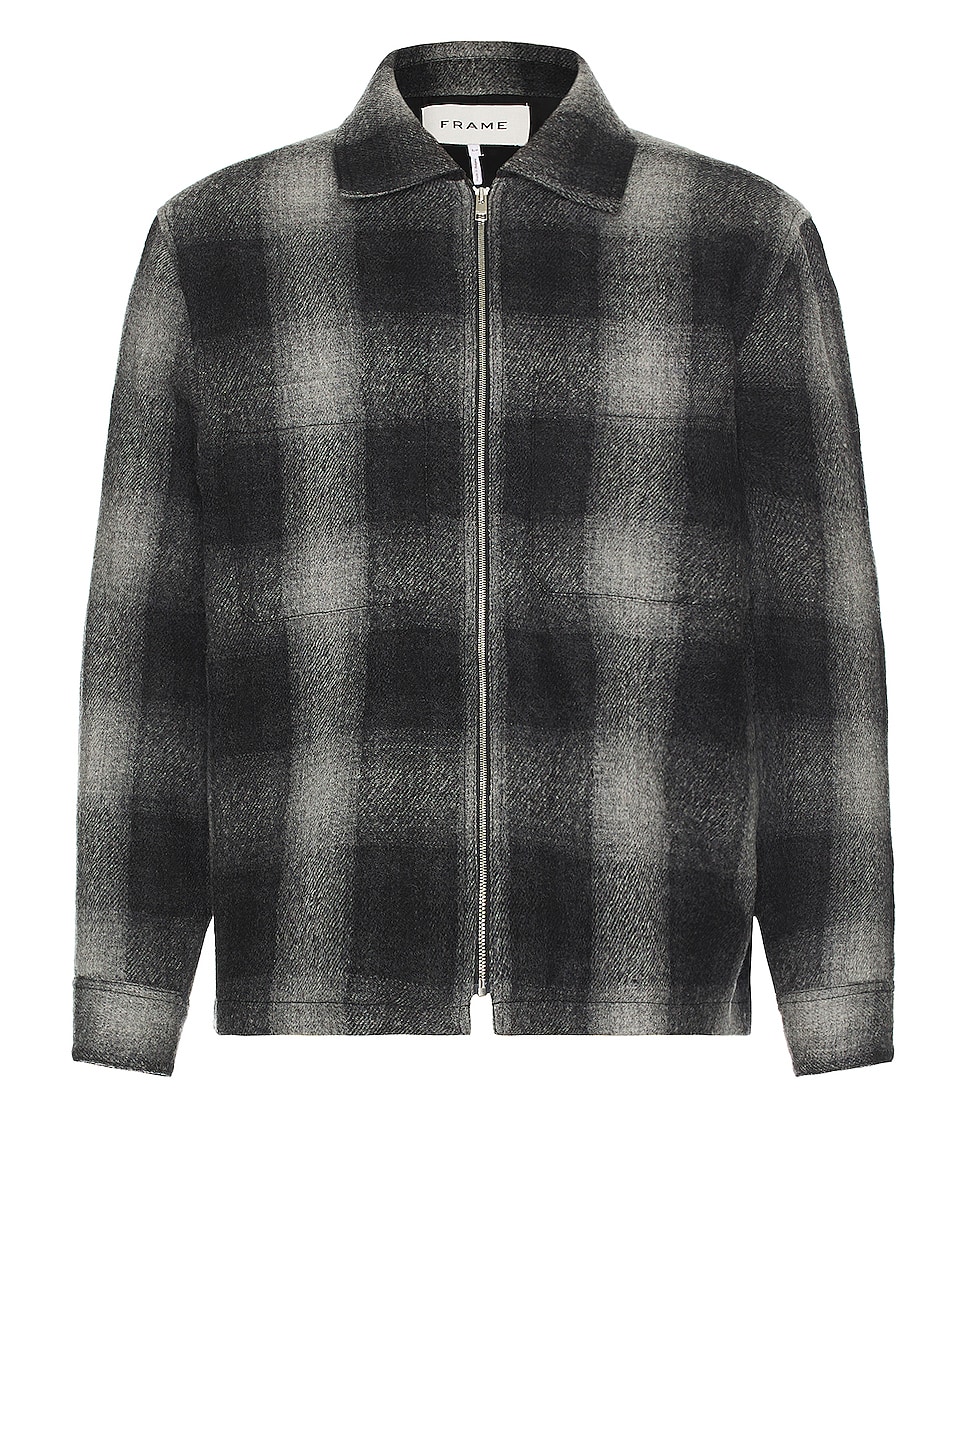 Image 1 of FRAME Plaid Wool Jacket in Grey